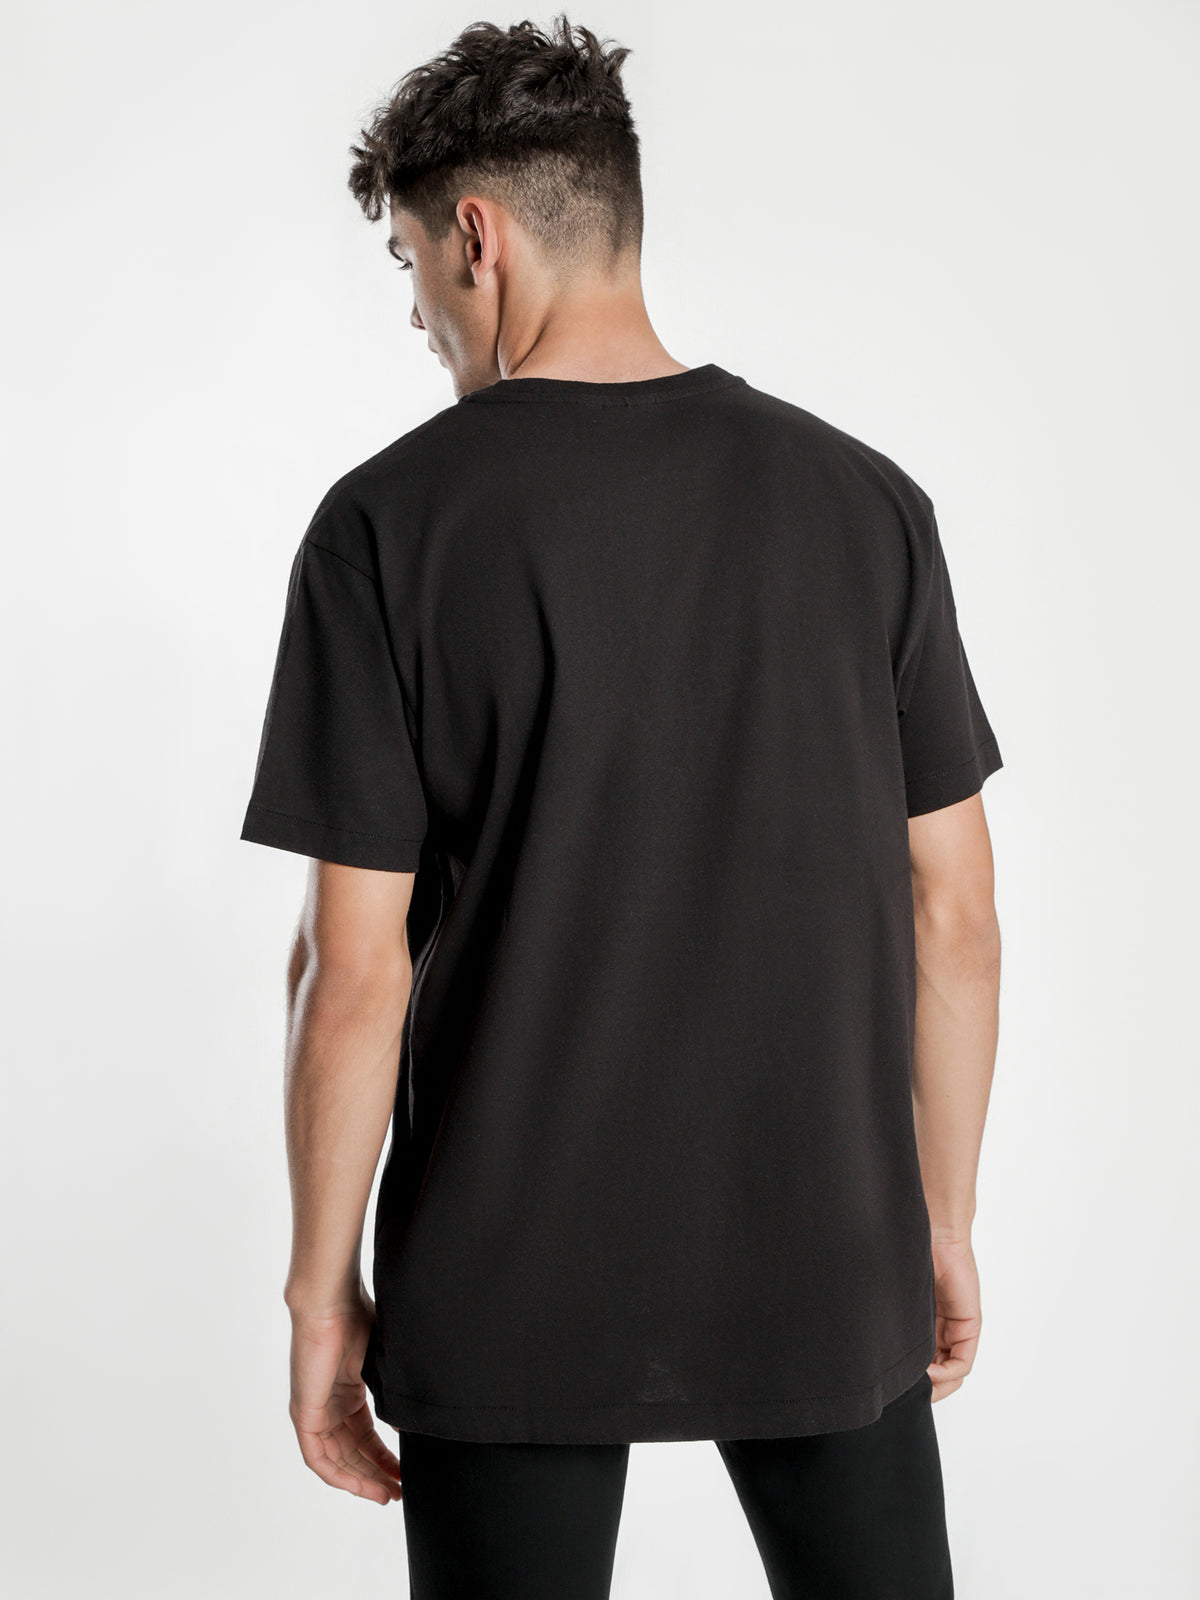 Sox Short Sleeve T-Shirt in Black